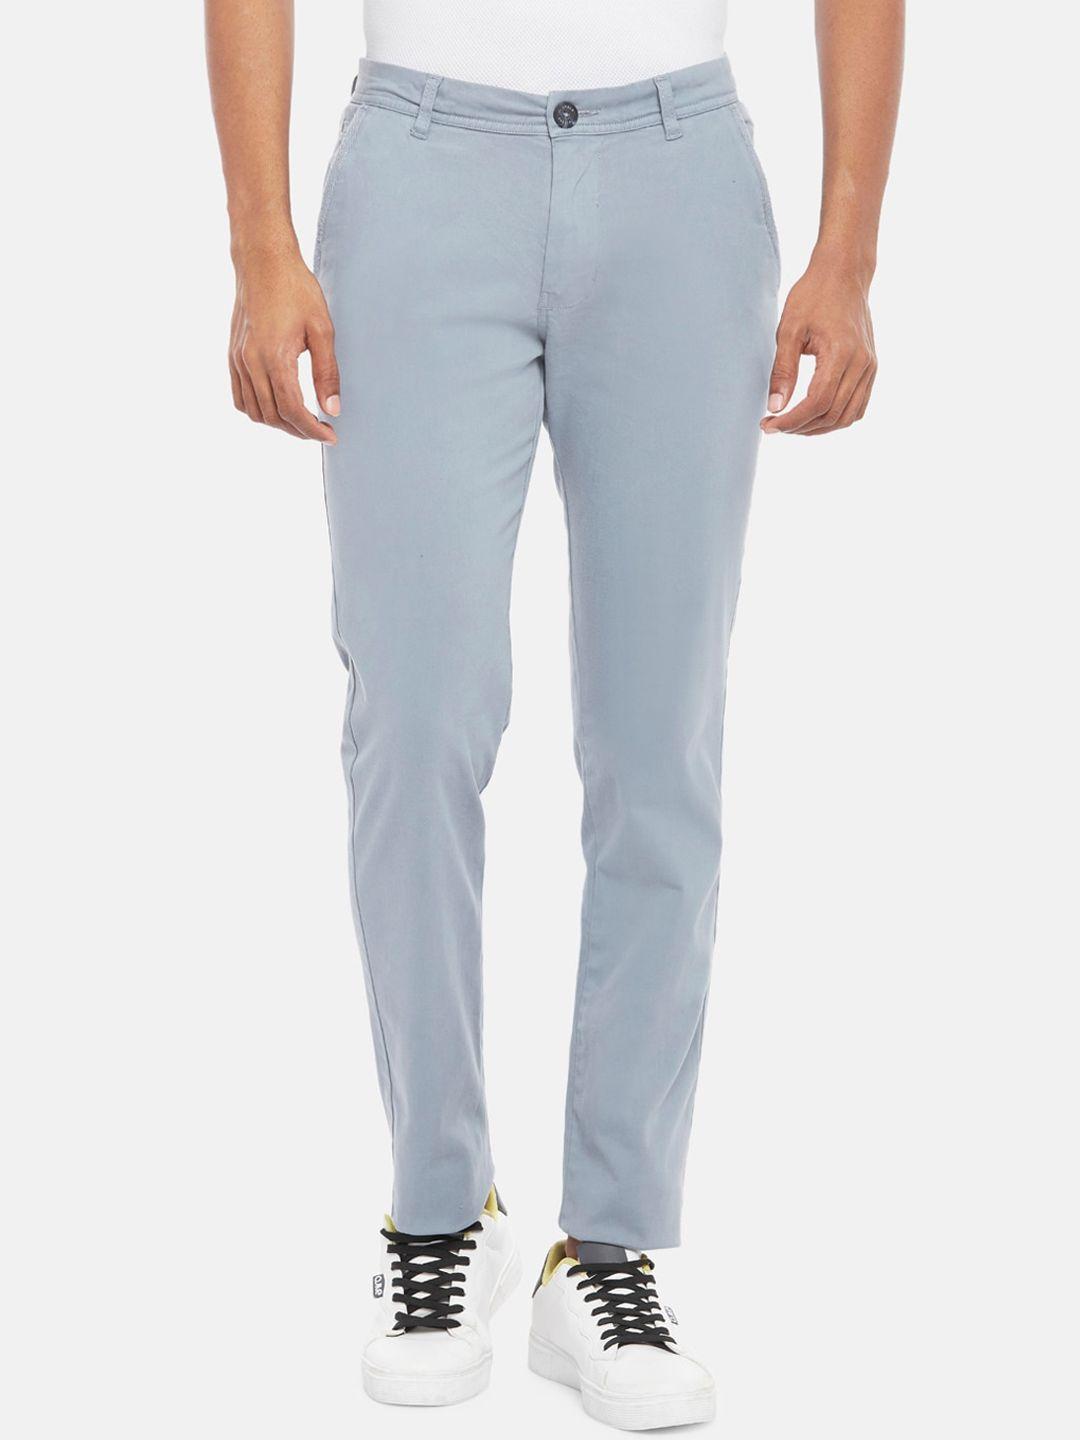 urban ranger by pantaloons men grey slim fit trousers